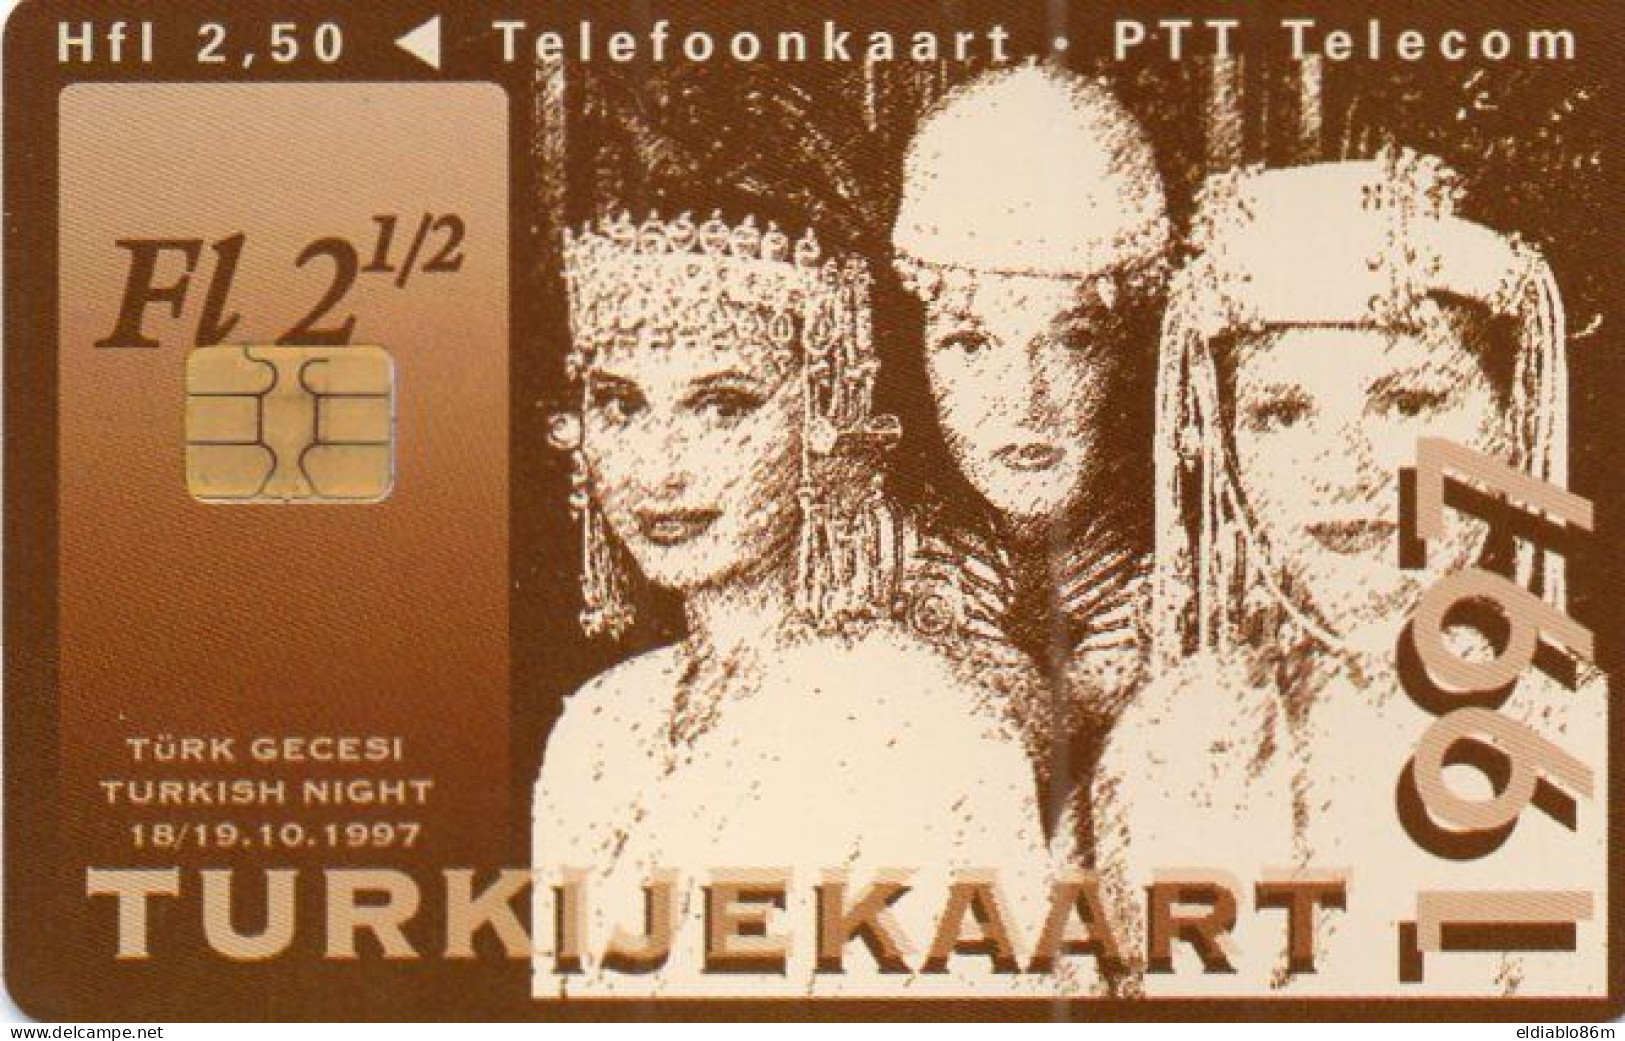 NETHERLANDS - CHIP CARD - CKD114 - TURKIJEKAART - TURKISH NIGHT - WOMAN - Publiques